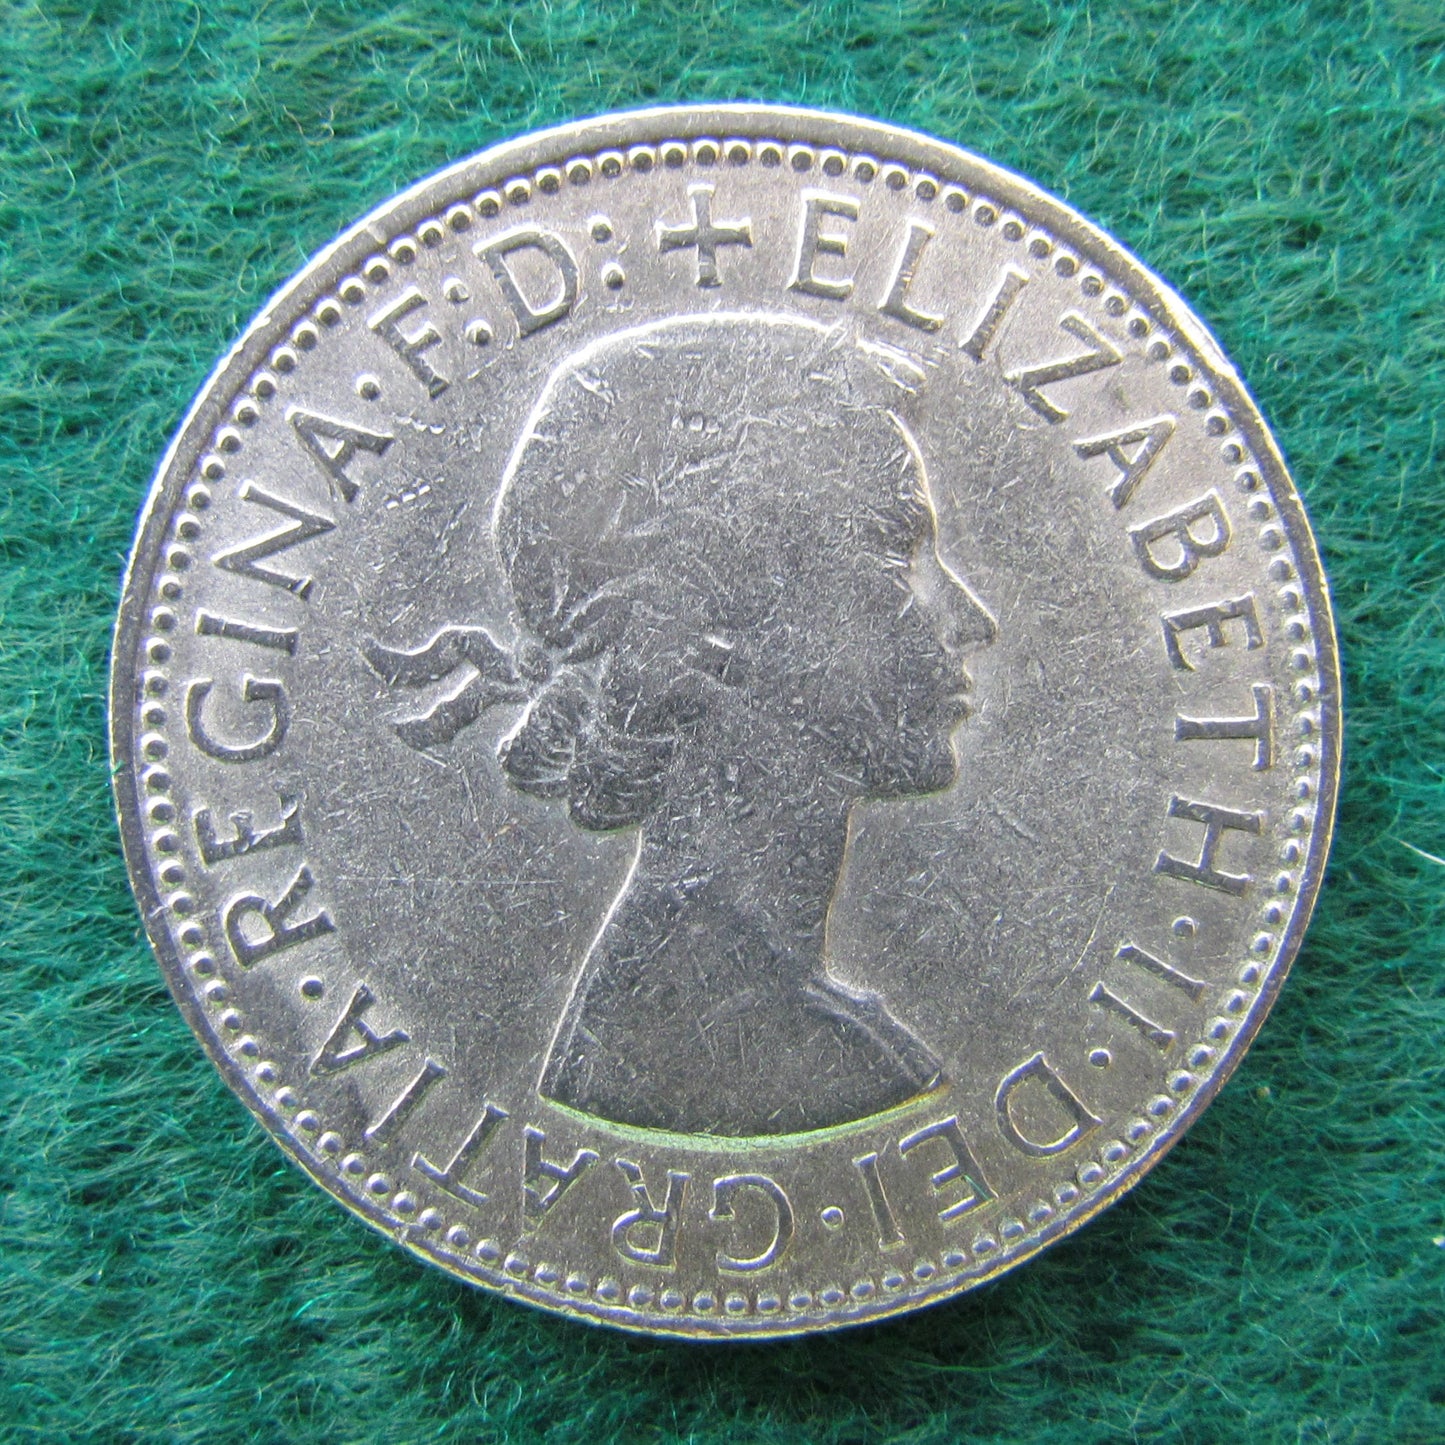 Australian 1962 2/- Florin Queen Elizabeth II Coin - Circulated